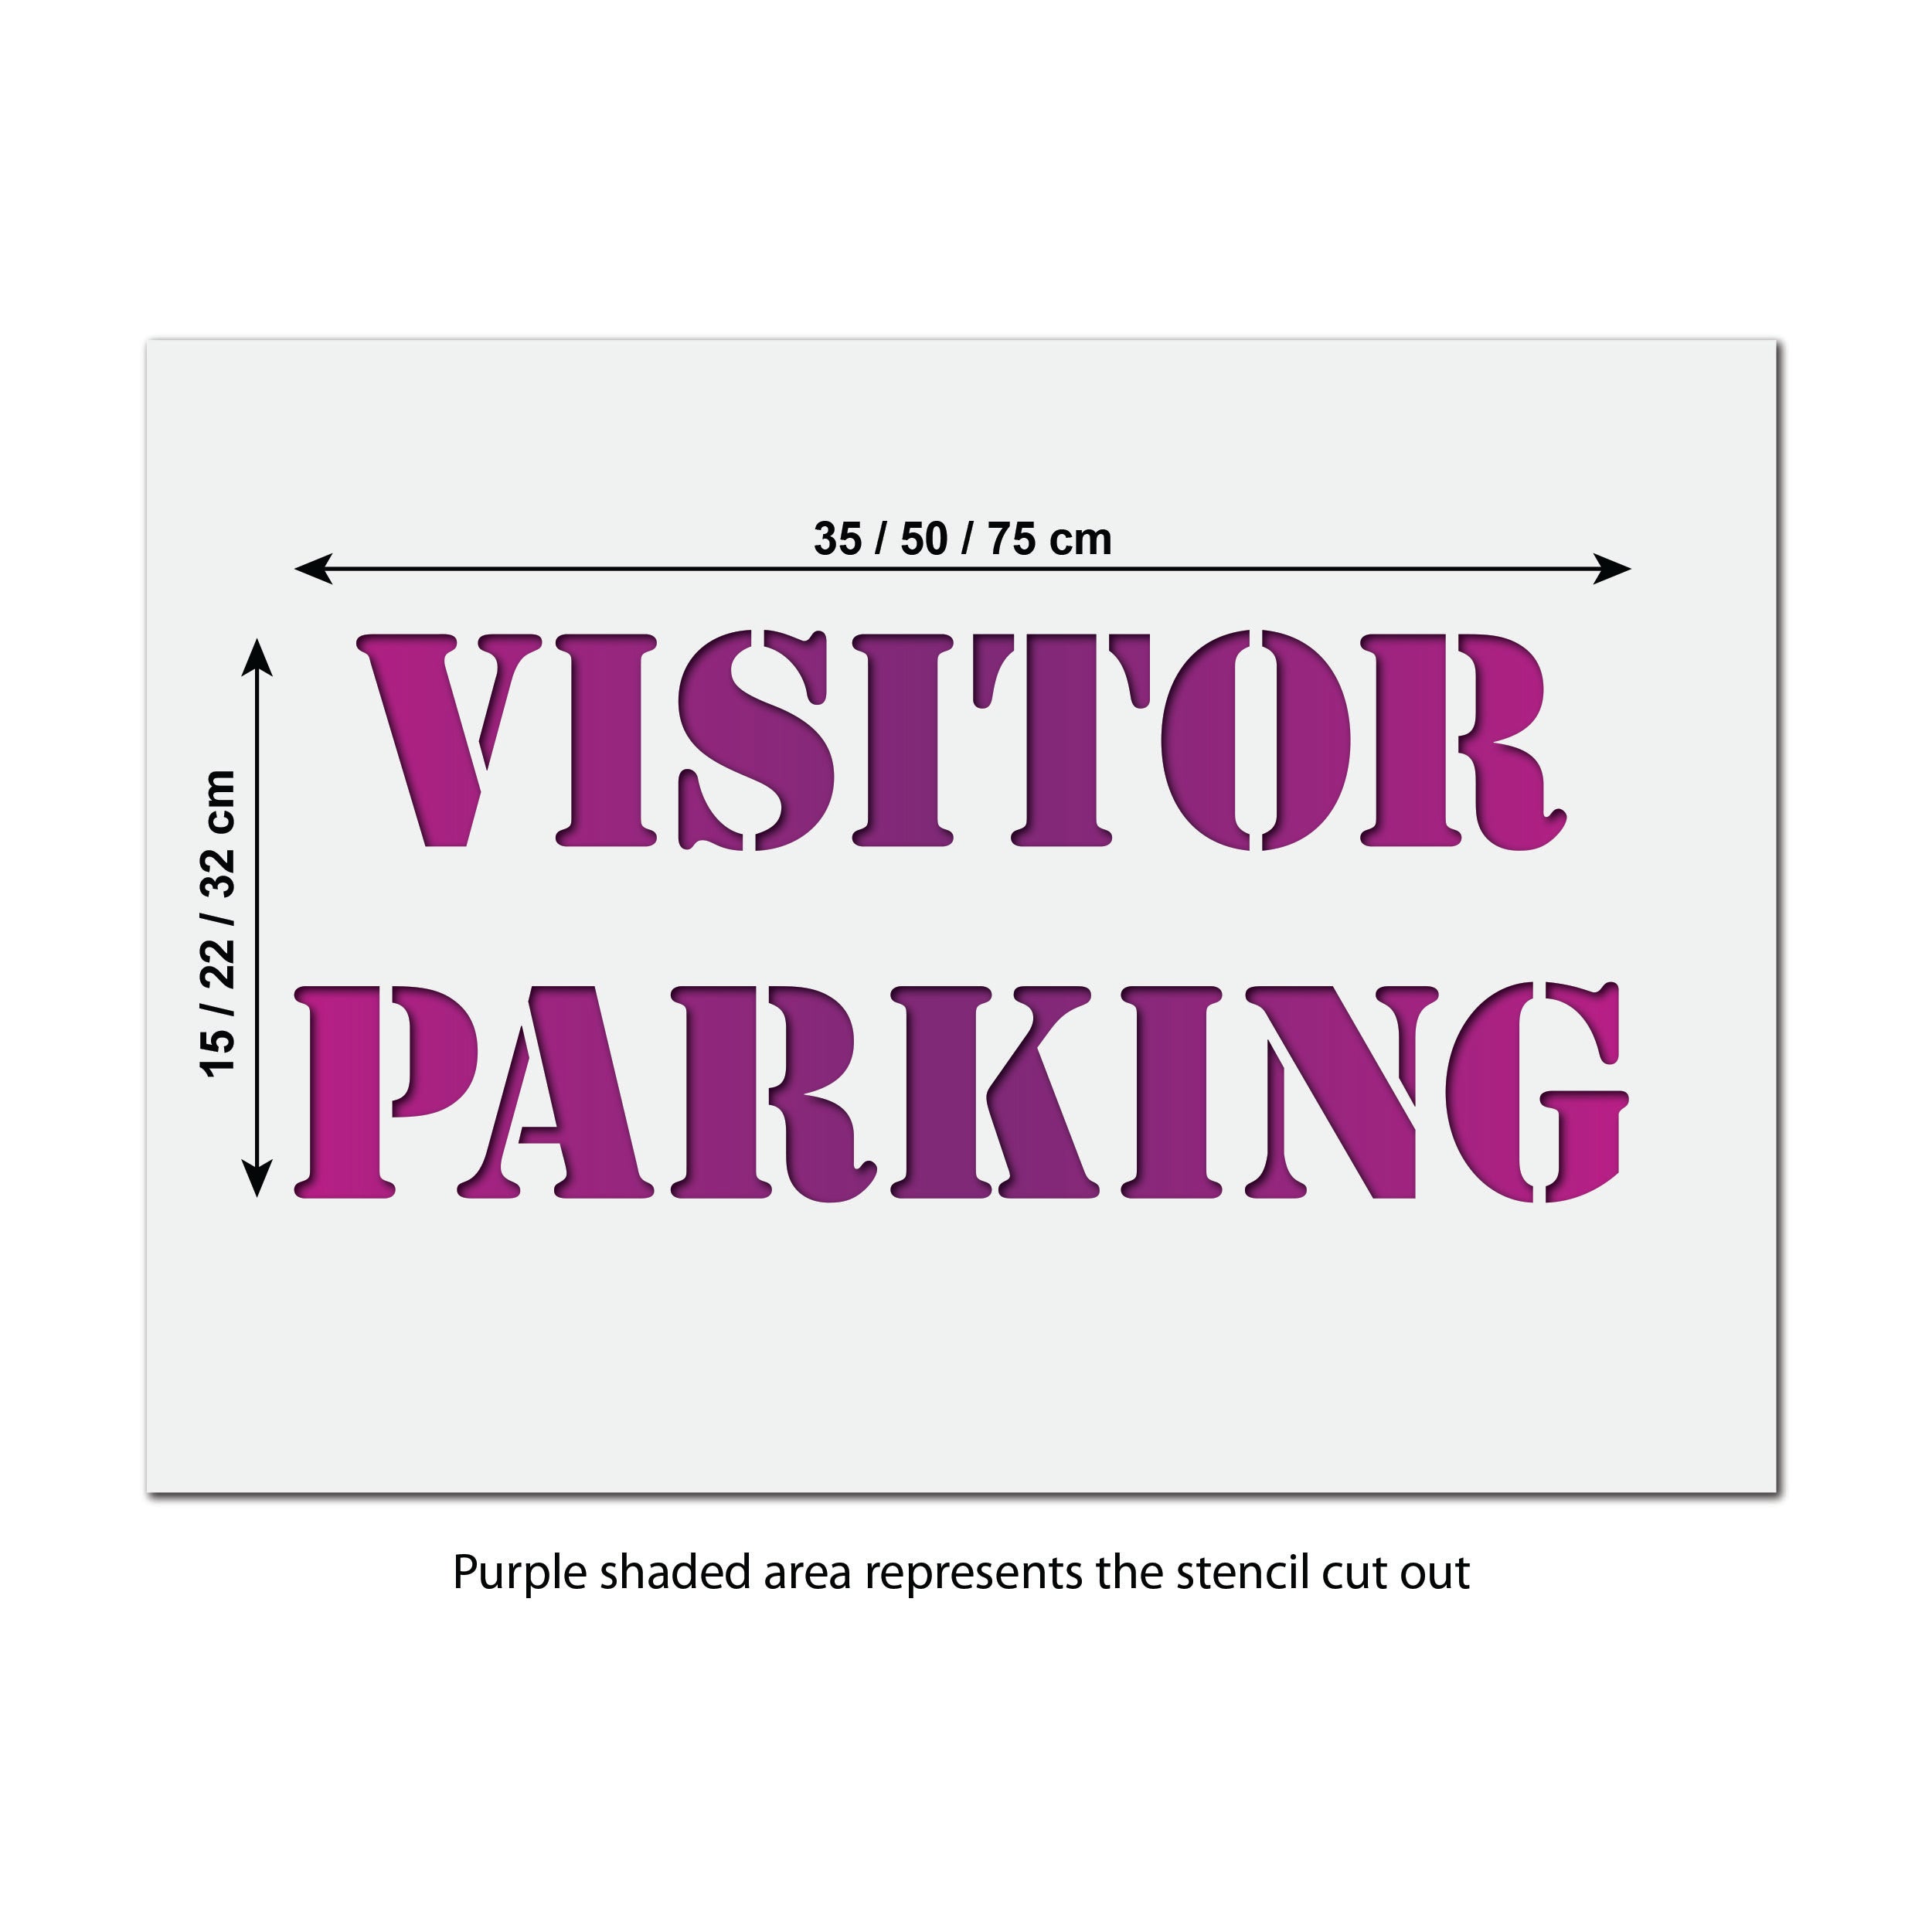 CtaftStar Visitor Parking Stencil Size Guide